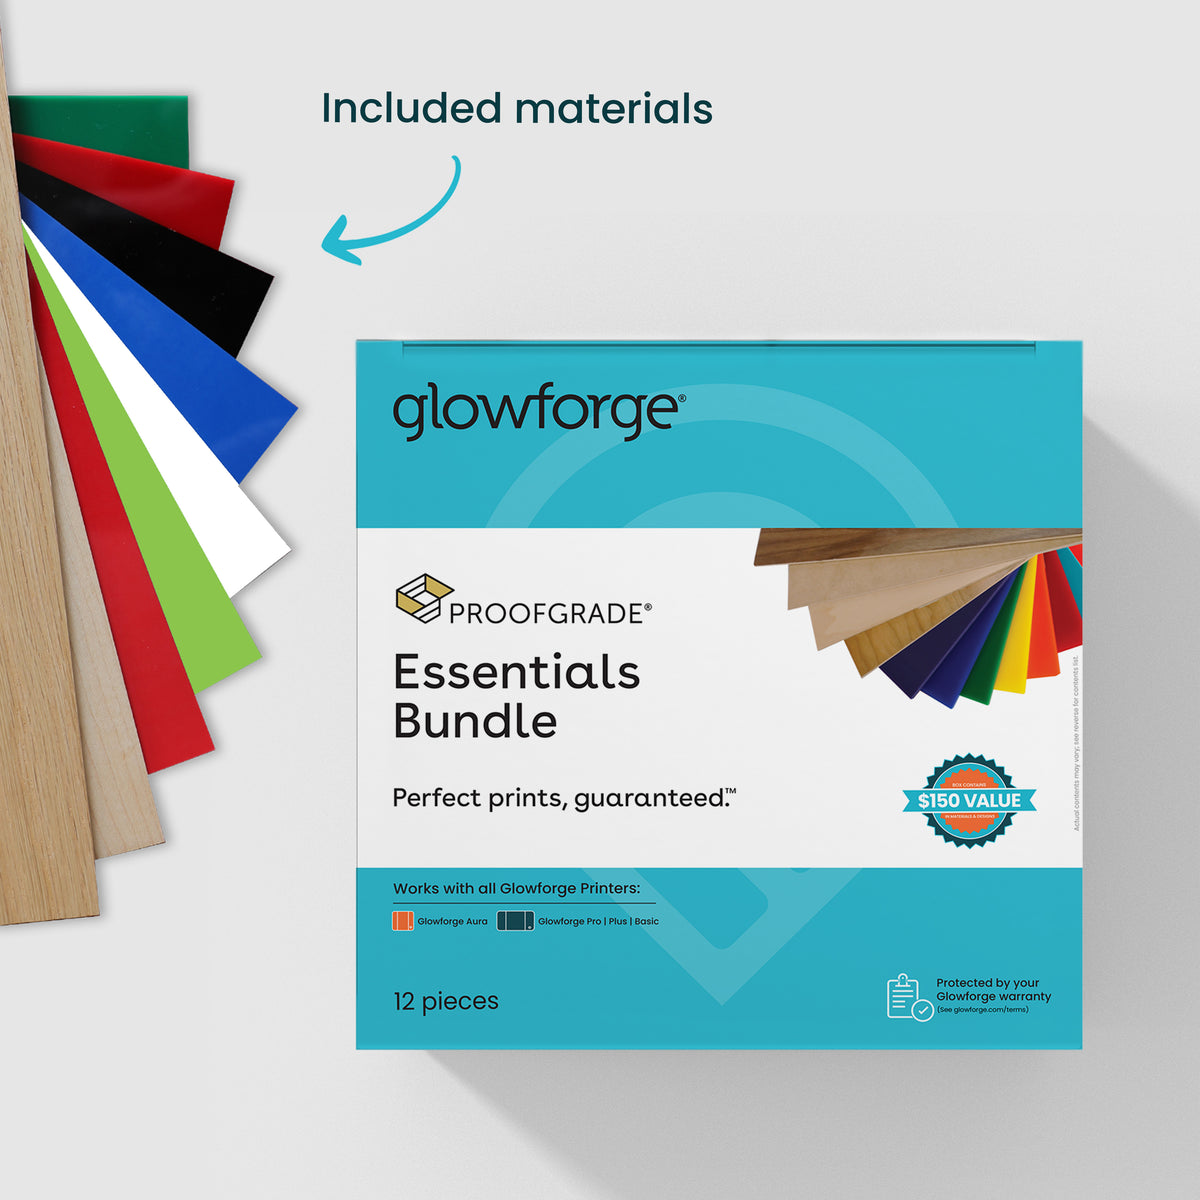 Glowforge Proofgrade Essentials Bundle 803-00 - Best Buy